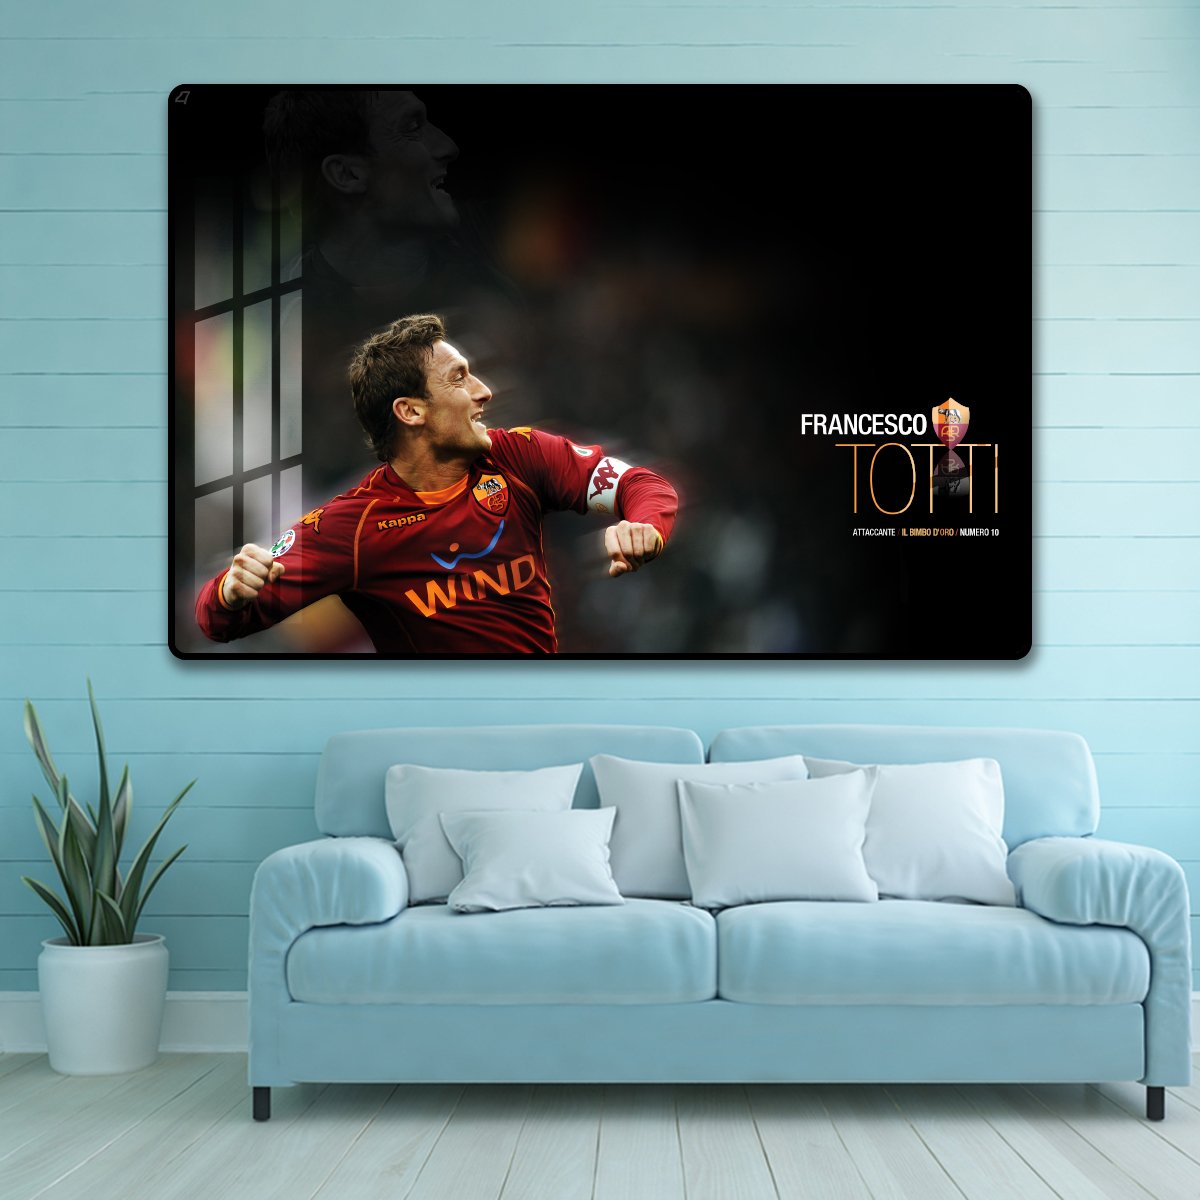 Tranh cầu thủ  Francesco Totti